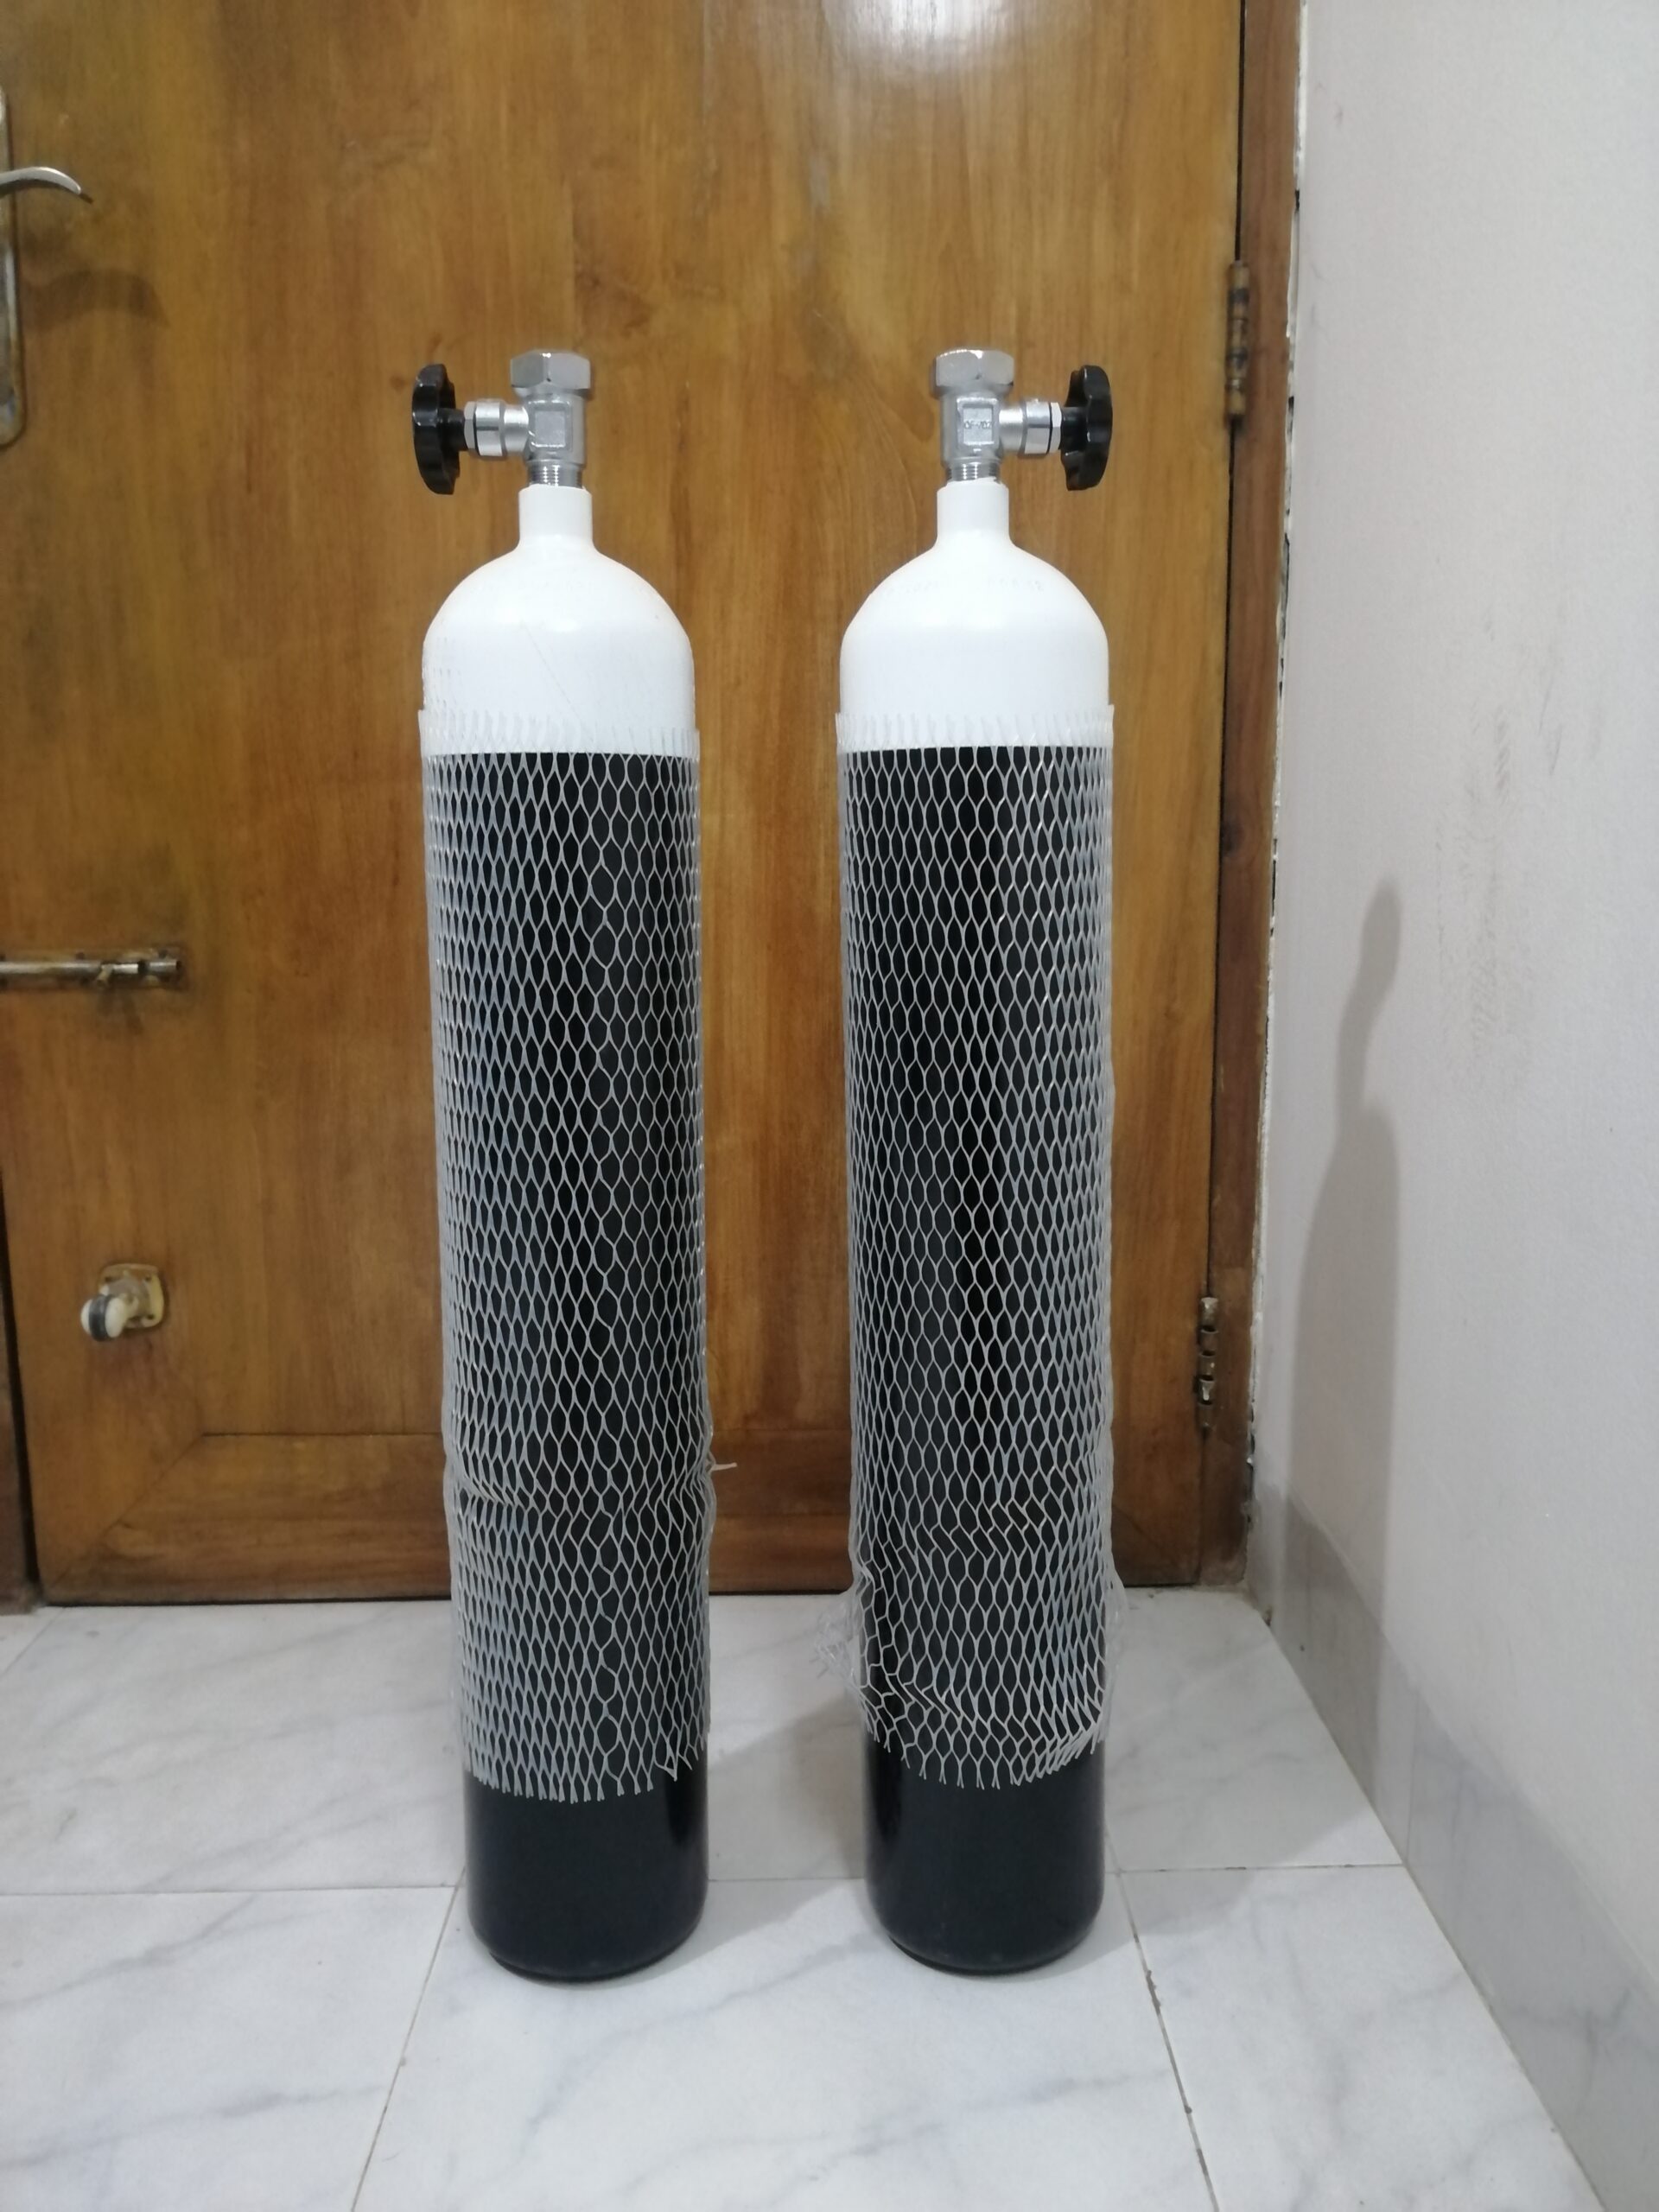 Oxygen cylinder price in Dhaka